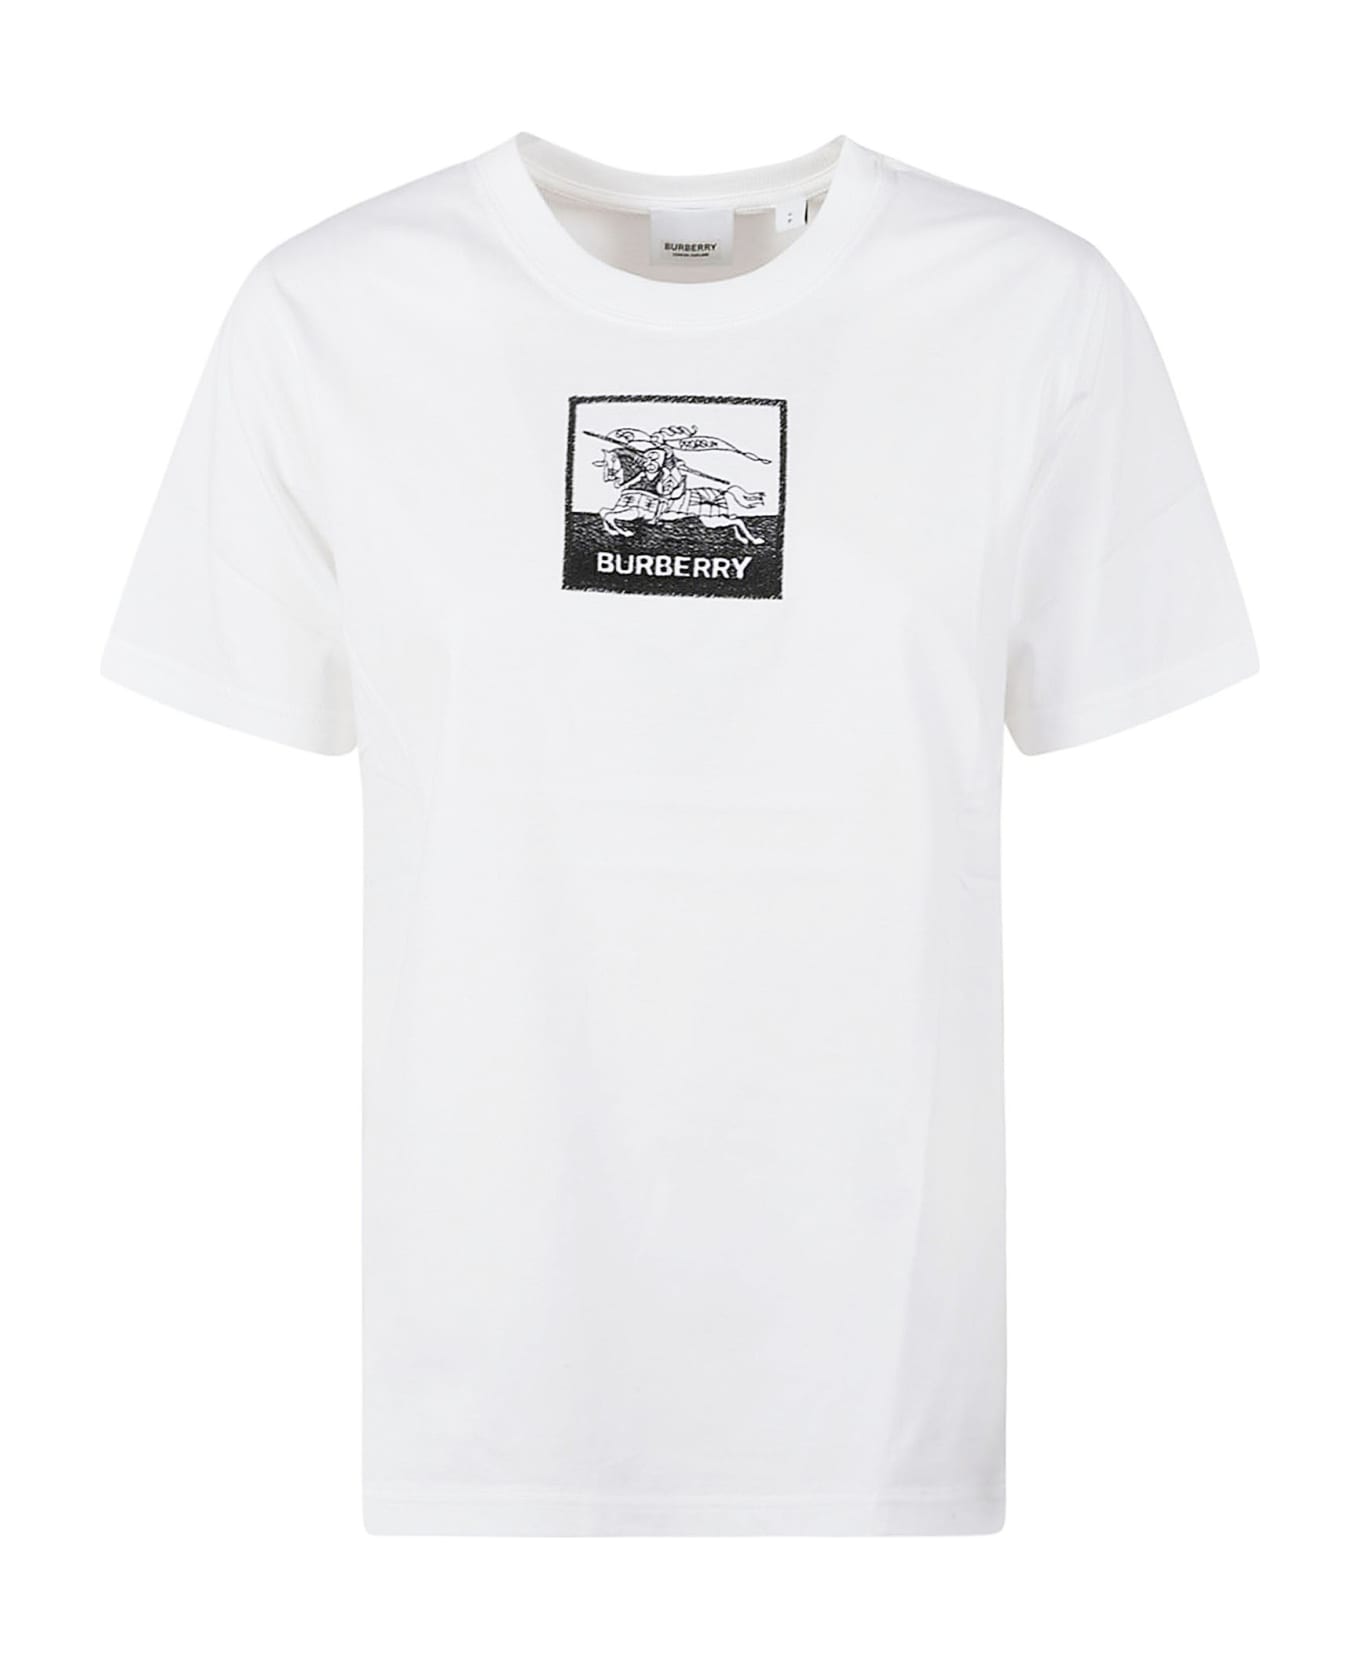 Burberry Margot T-shirt - White Tシャツ